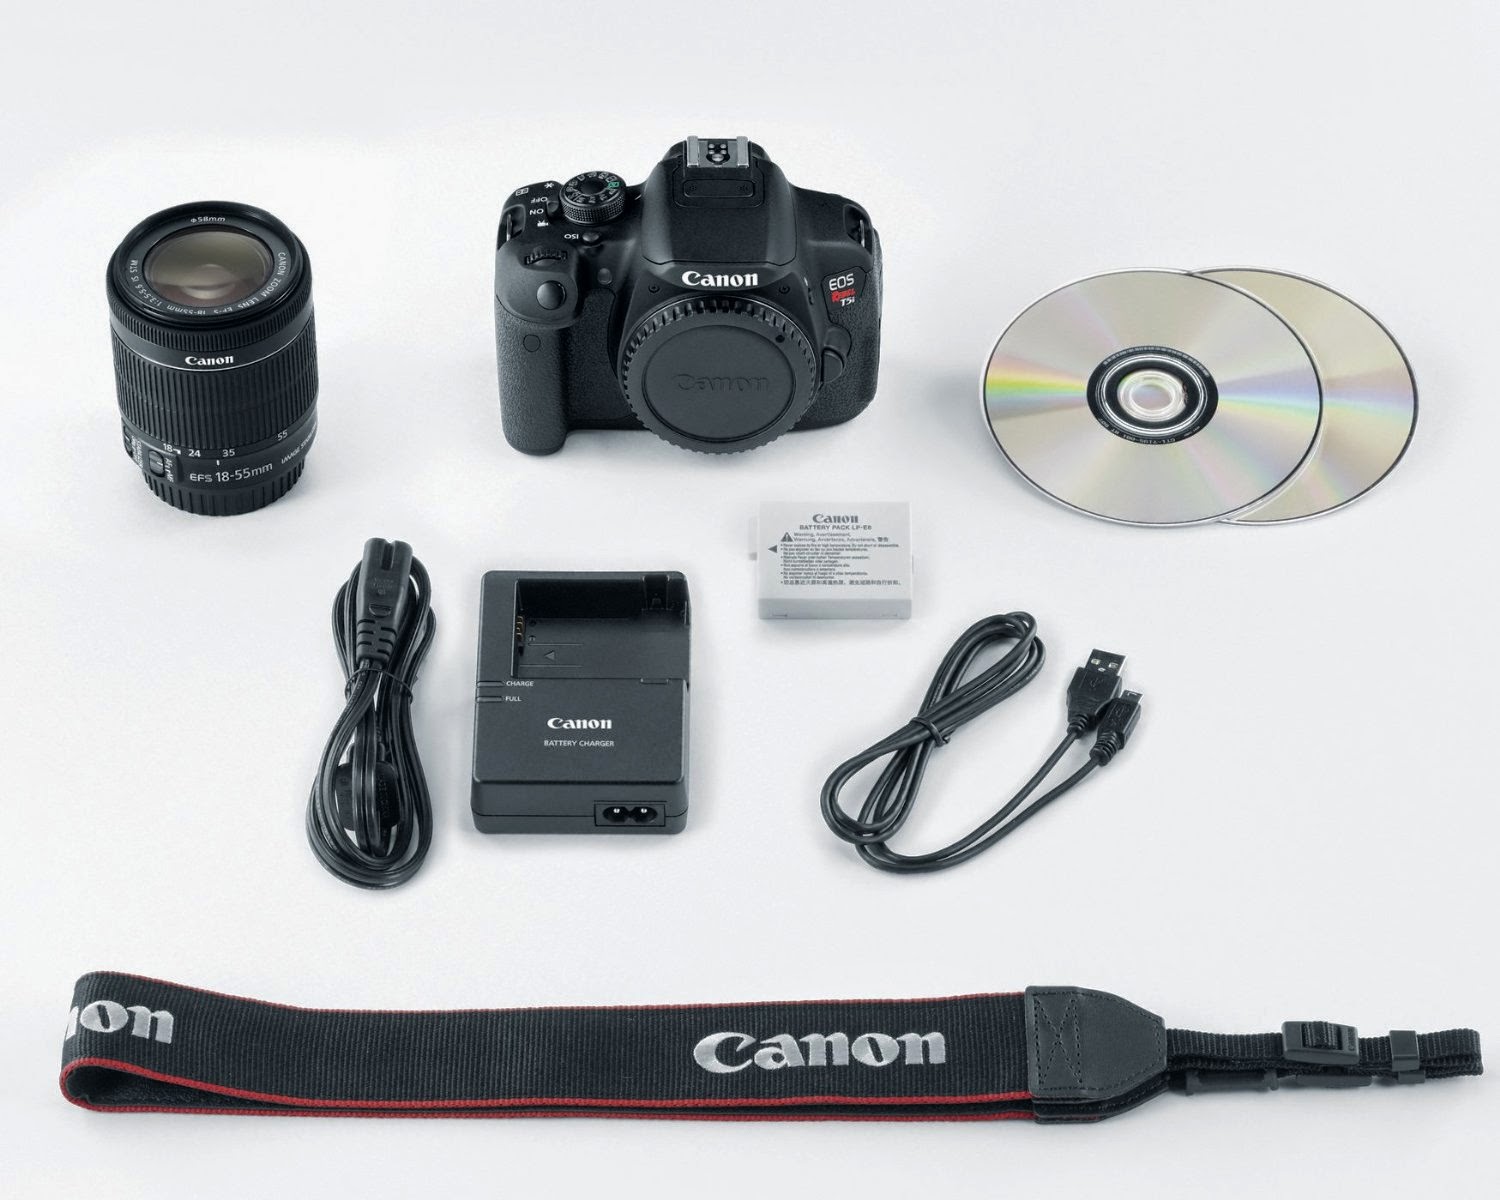 Canon EOS Rebel T5i Digital SLR Camera bundle, review camera and accessories